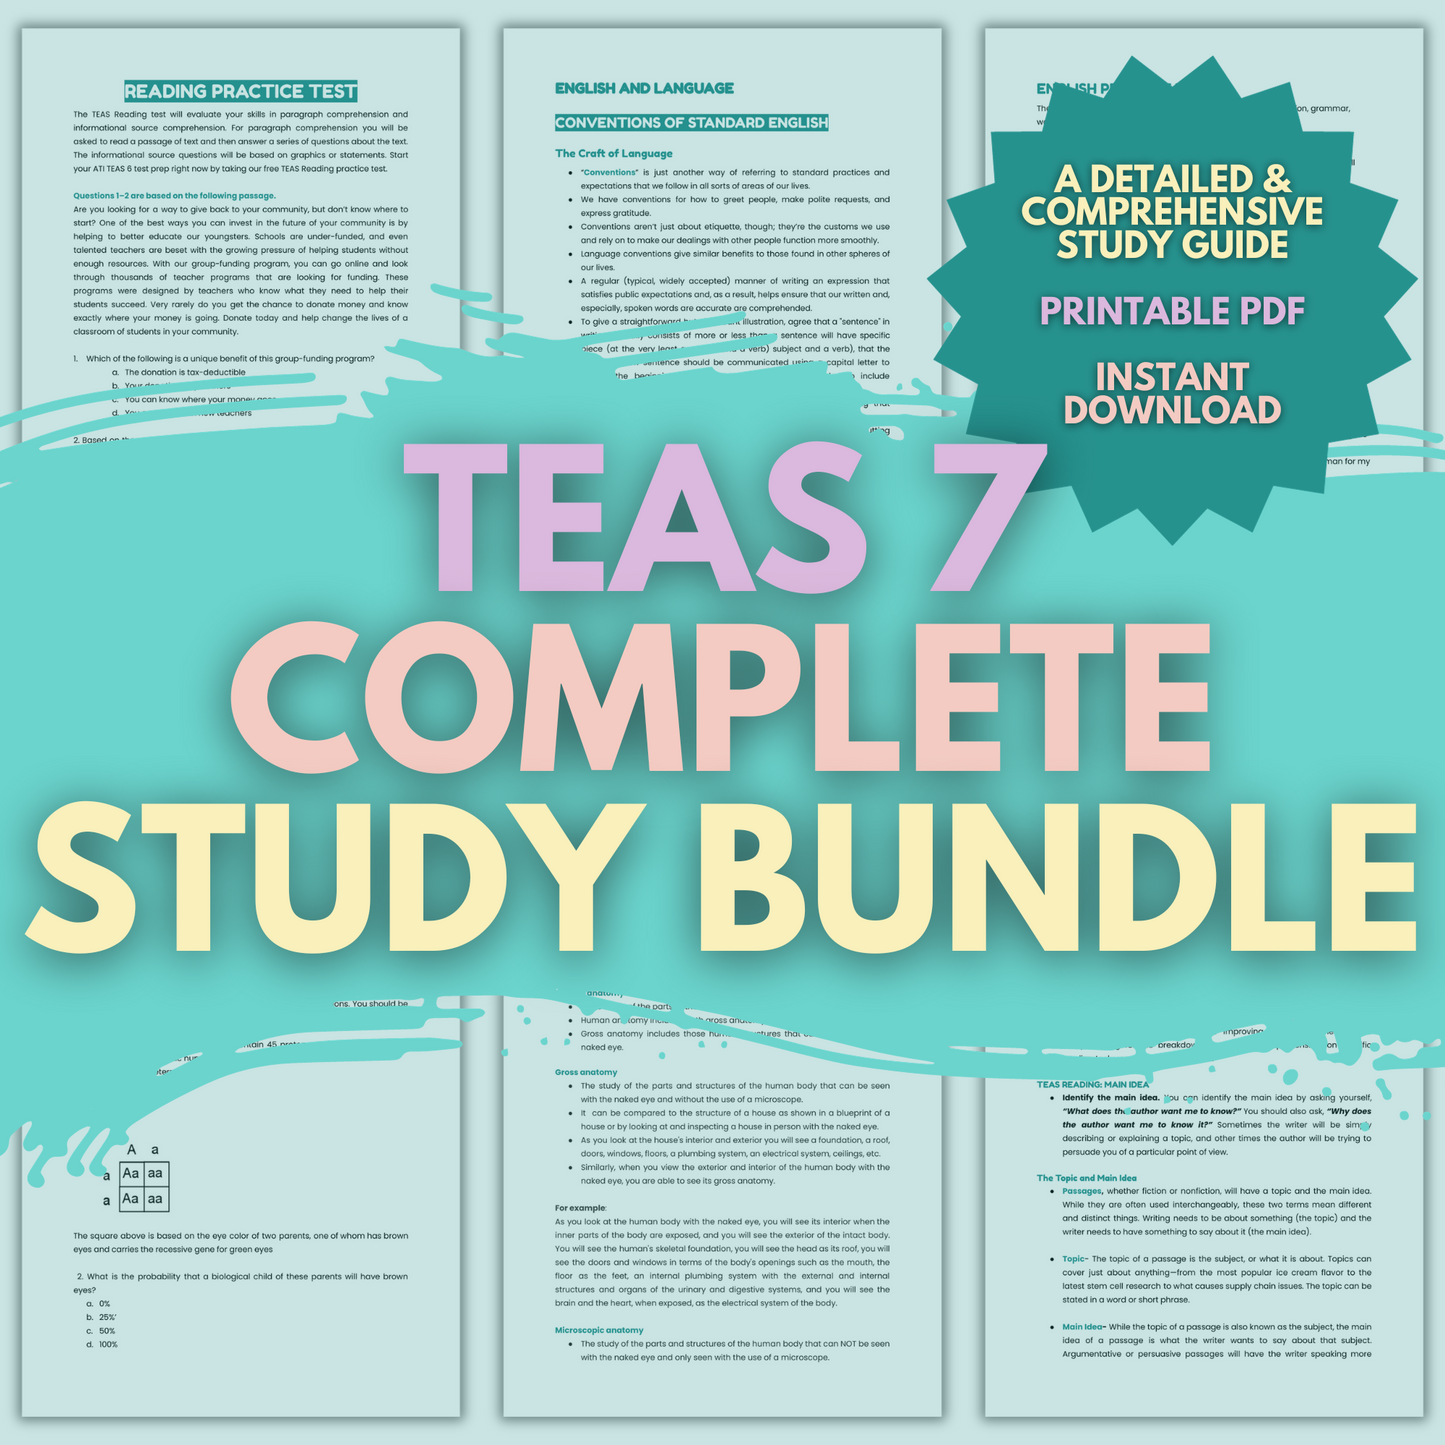 TEAS 7 Complete Study Bundle